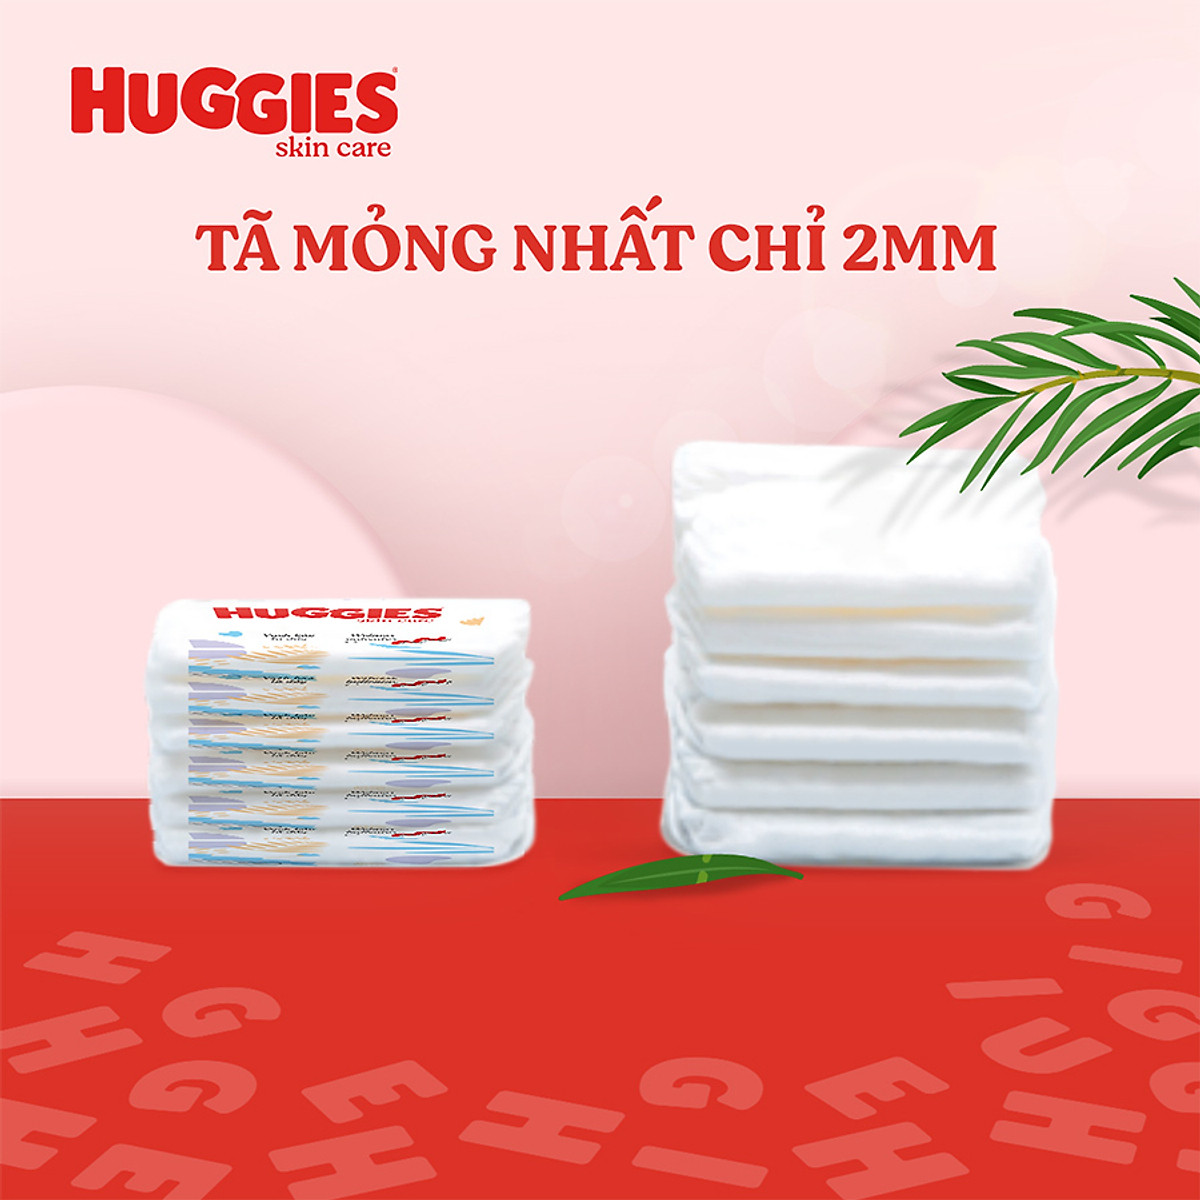 (Tặng cốc/Balo) Tã quần Huggies Mega Jumbo Skin Care Tràm trà M106, L96+8, XL84+4, XXL76+4